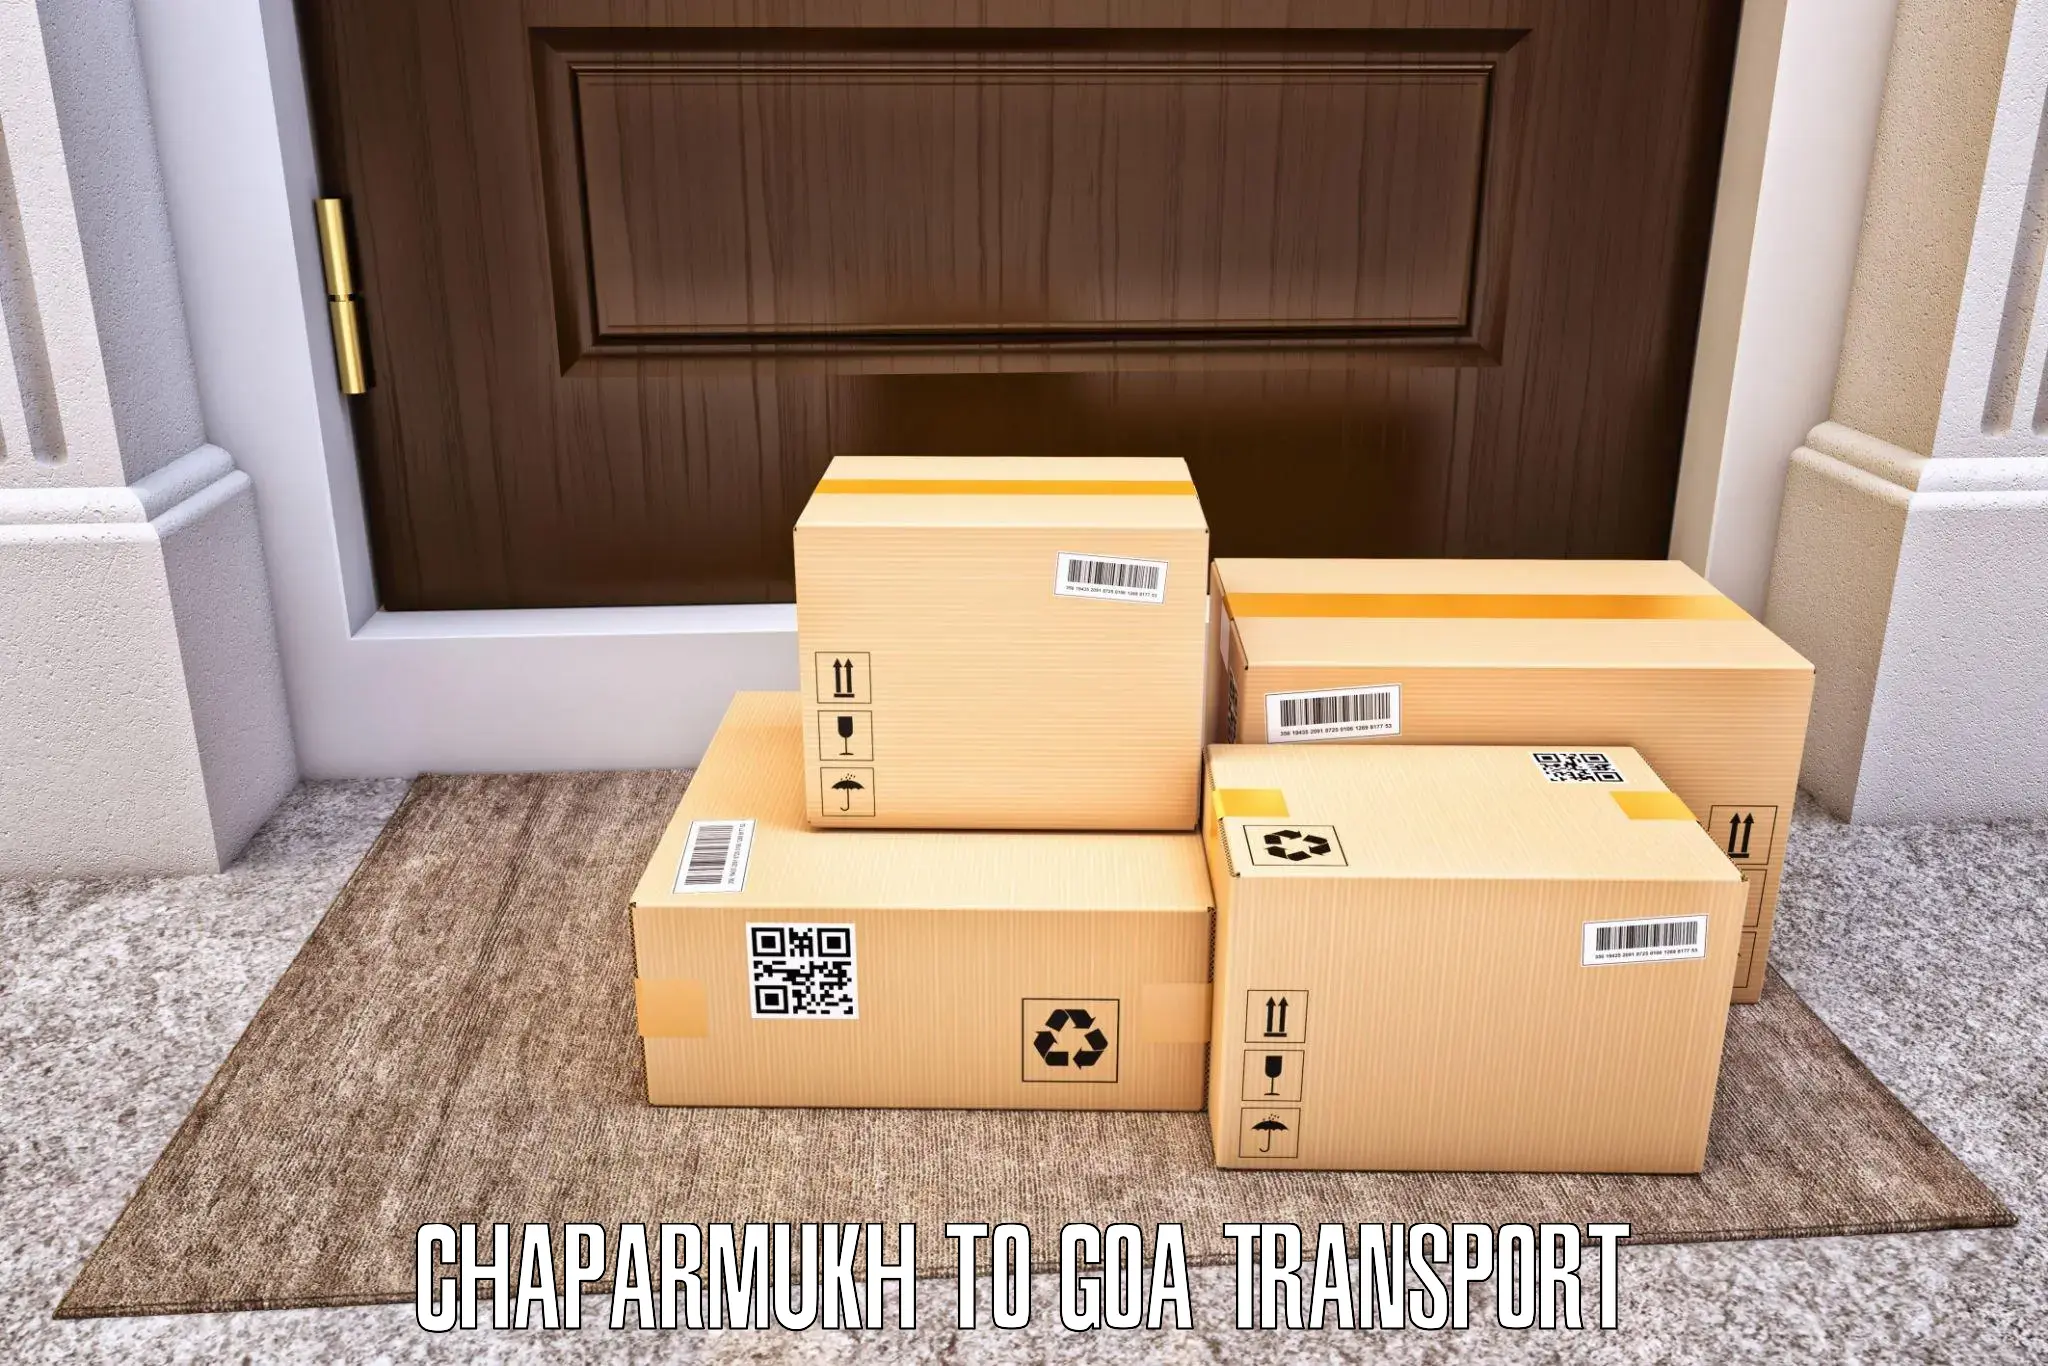 Online transport Chaparmukh to Goa